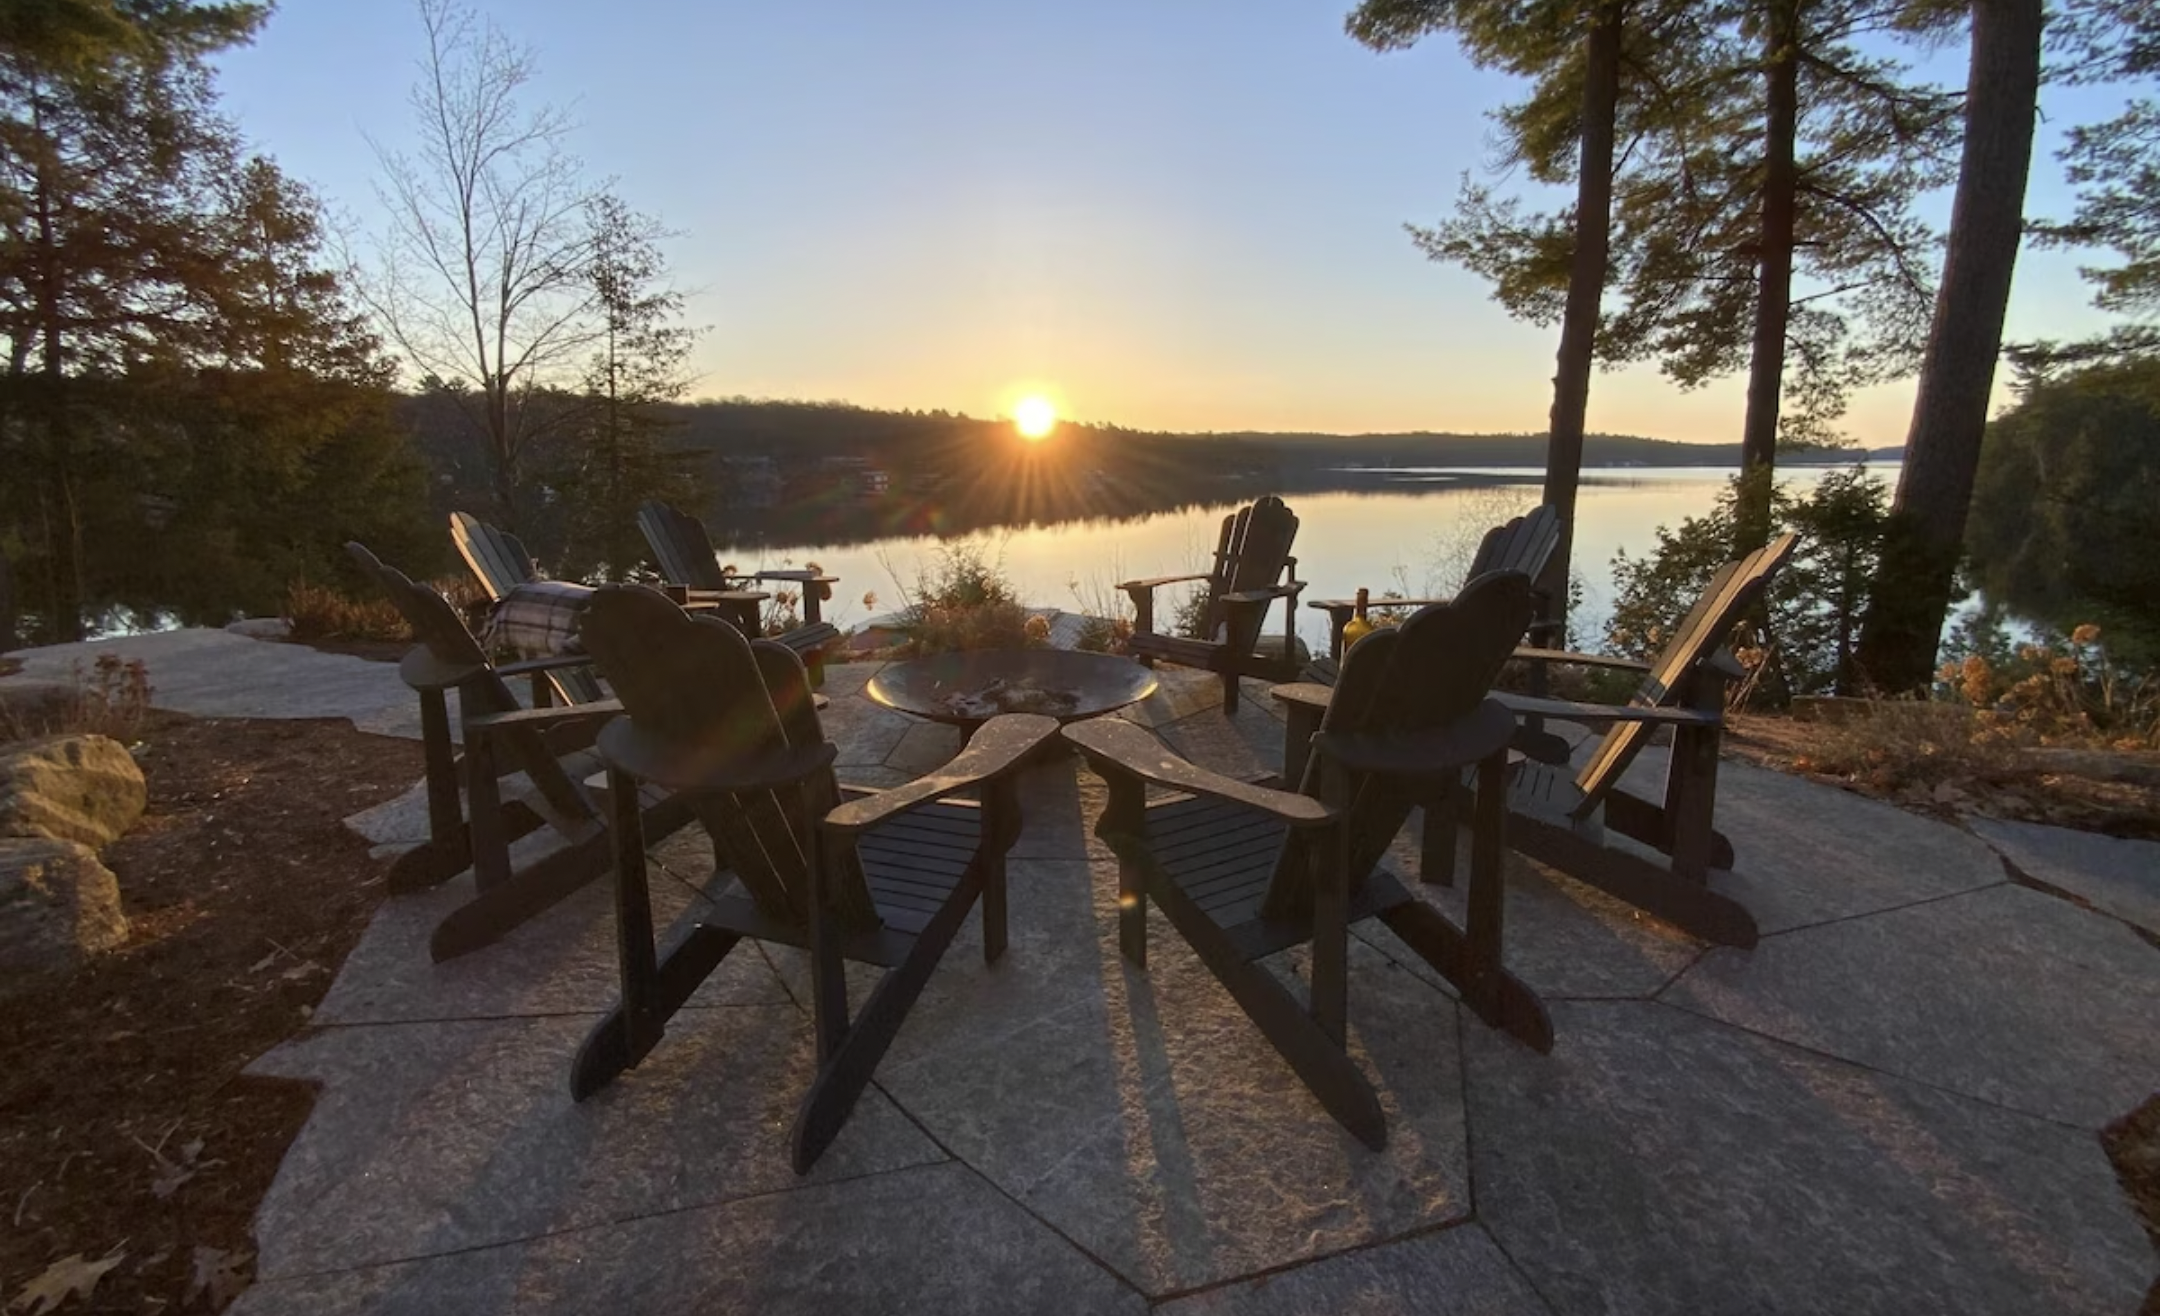 Muskoka chairs sit around a fire pit overlooking the lake at sunset